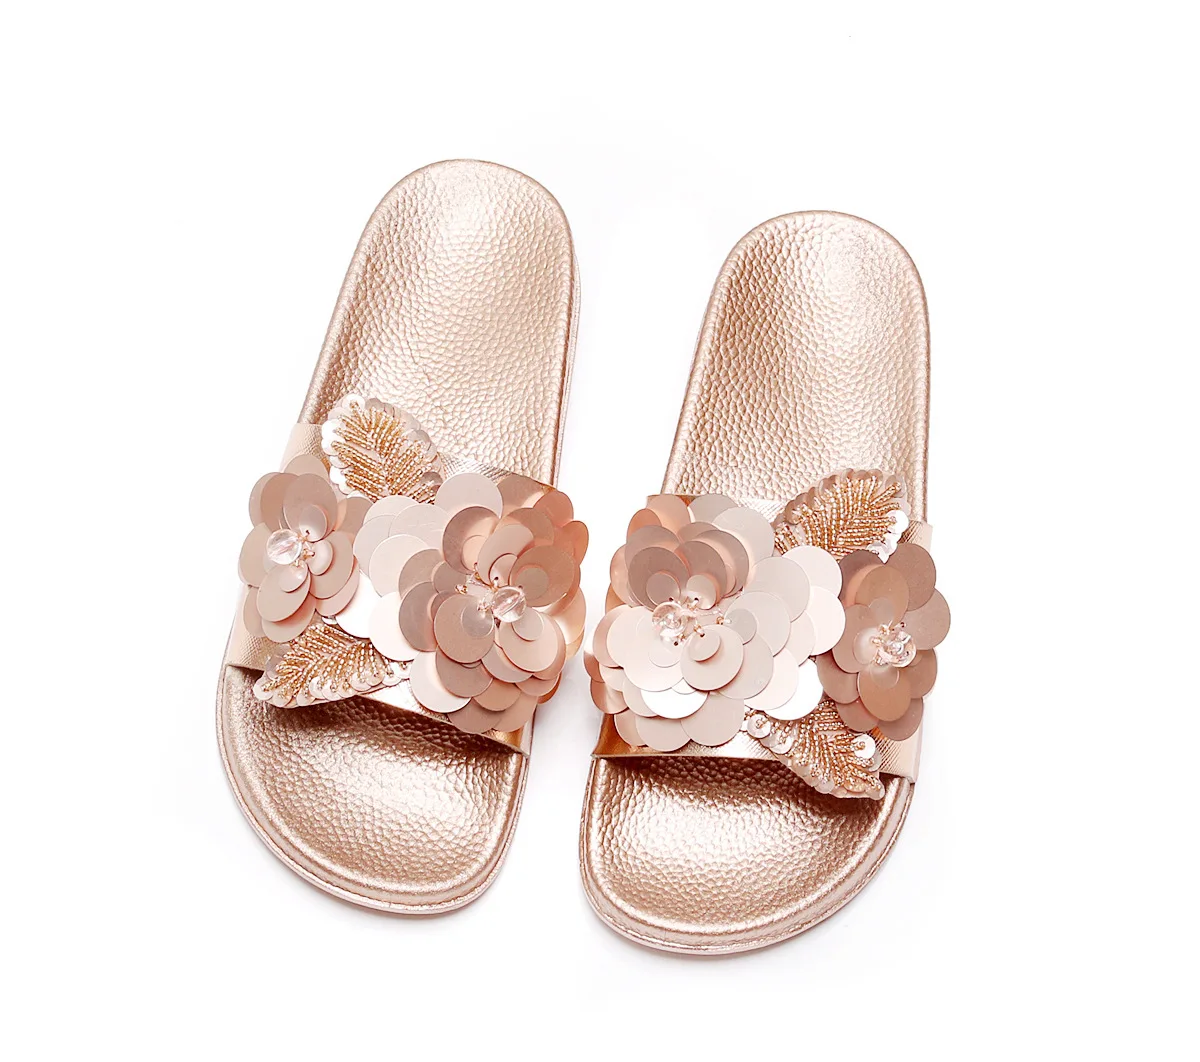 New Women Bright Slippers Spring Summer Autumn Home Beach Slippers Home Flip Flops Comfortable Flat Shoes 988 - Цвет: bronze